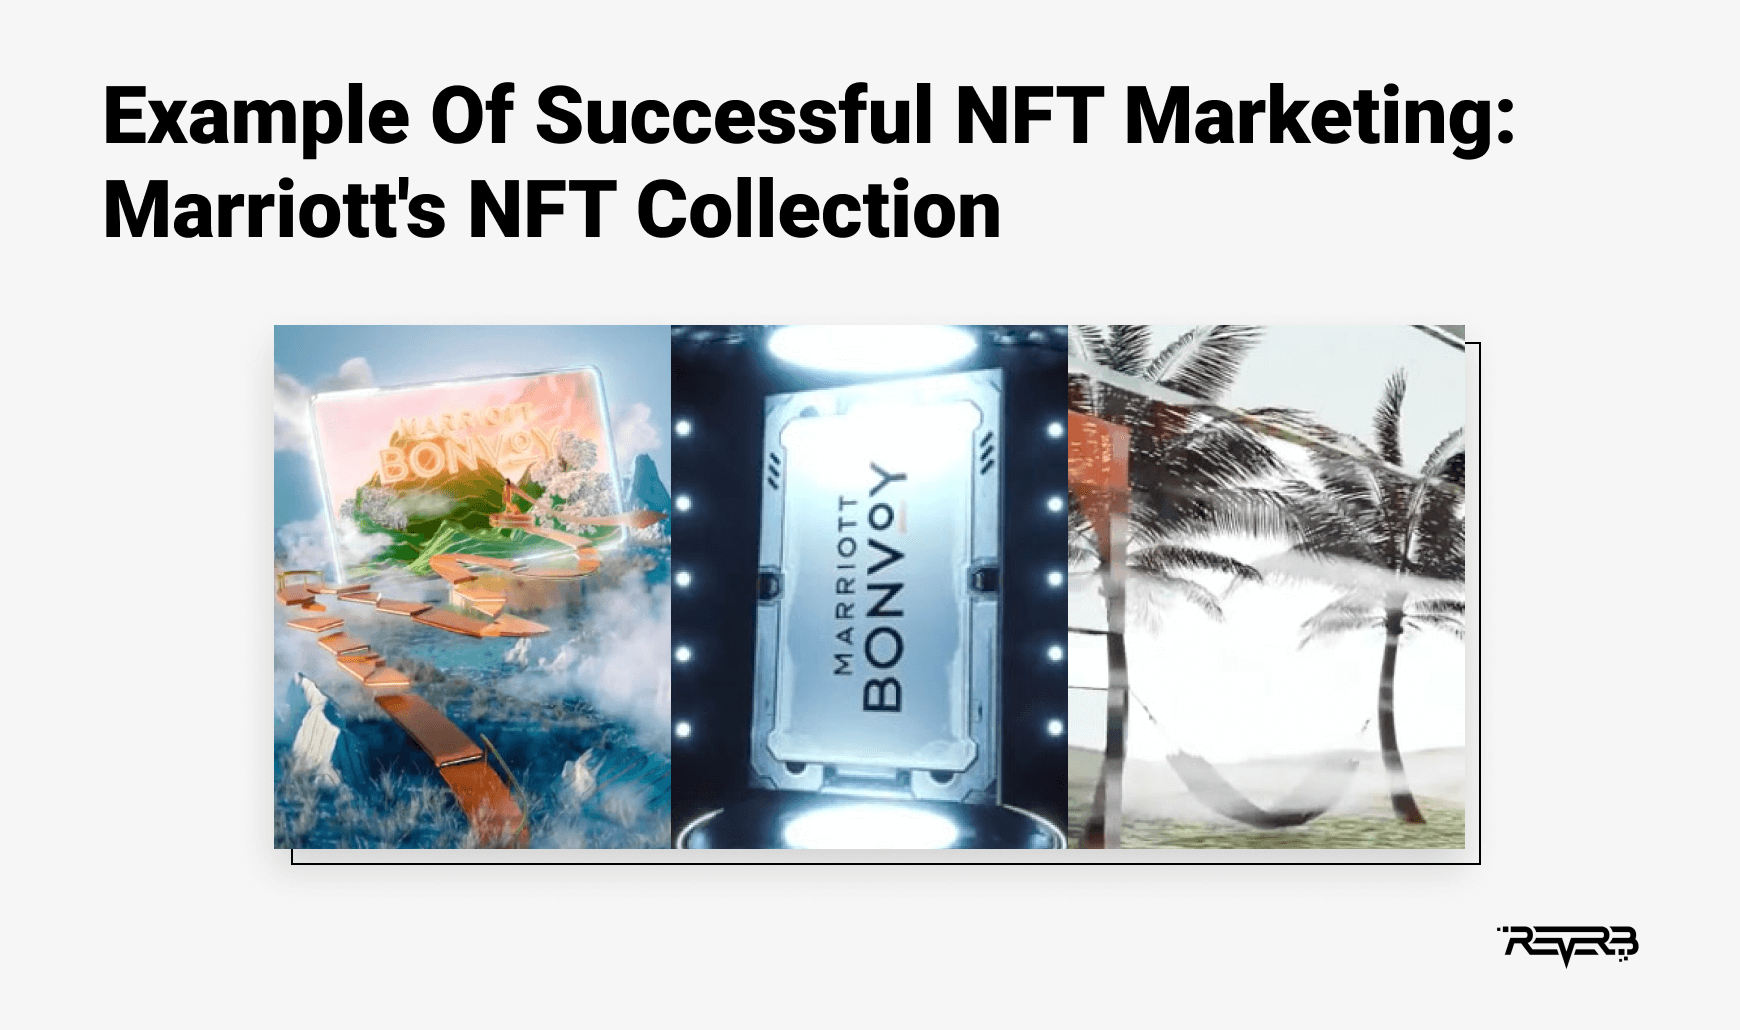 Marriott NFT collection